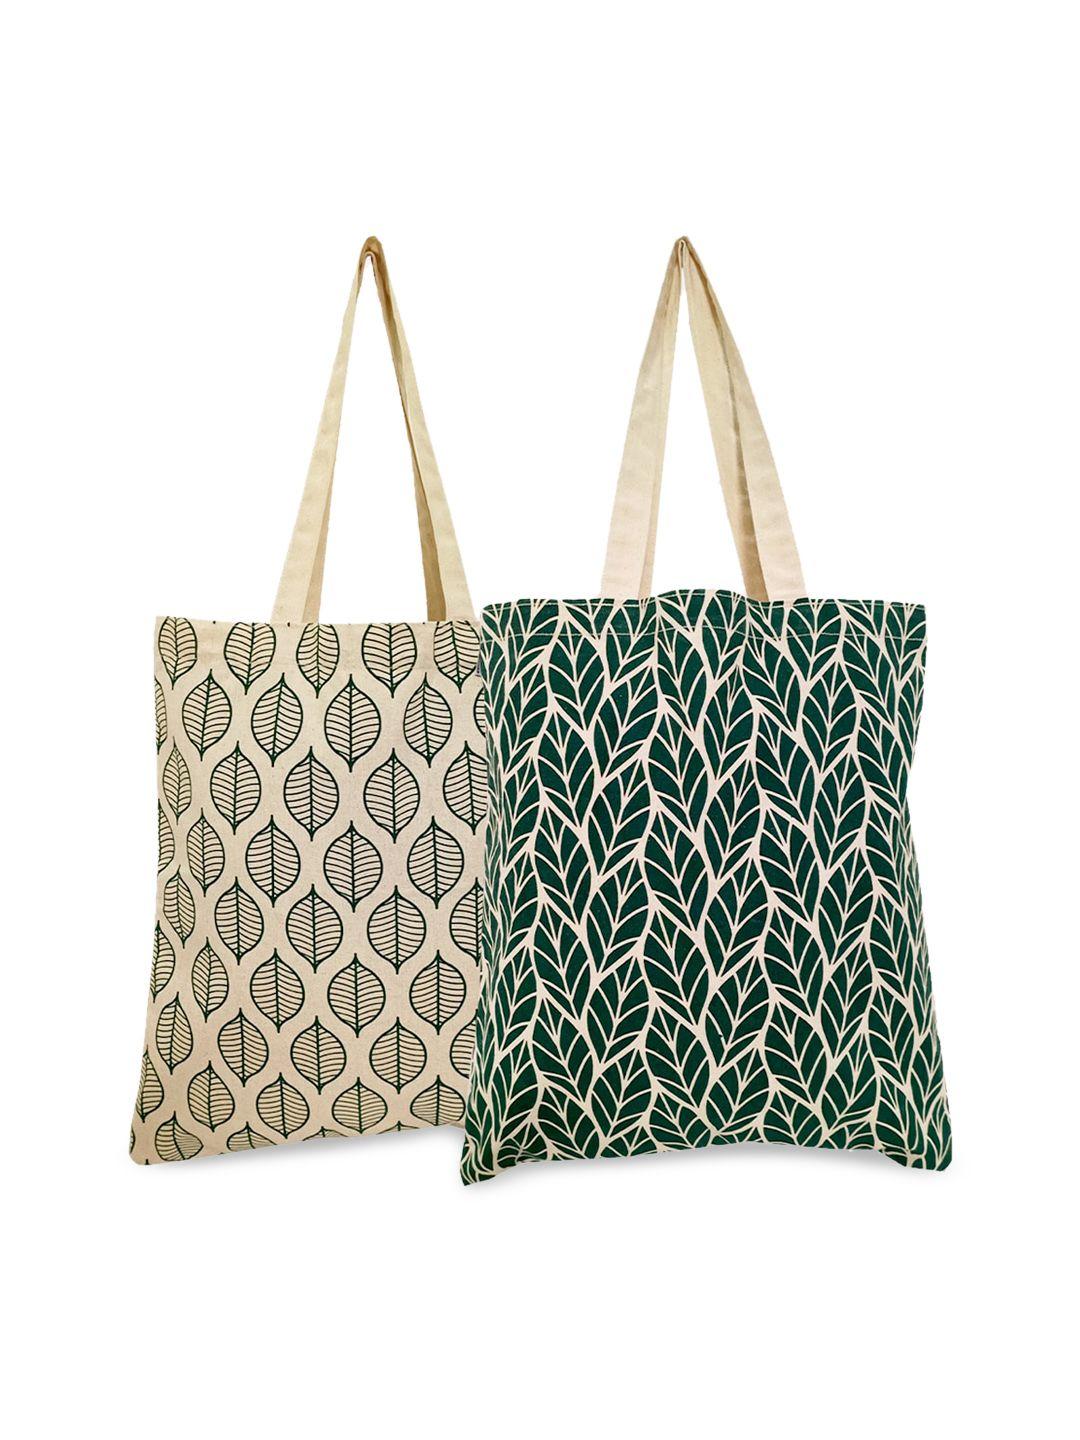 earthbags green shopper tote bag